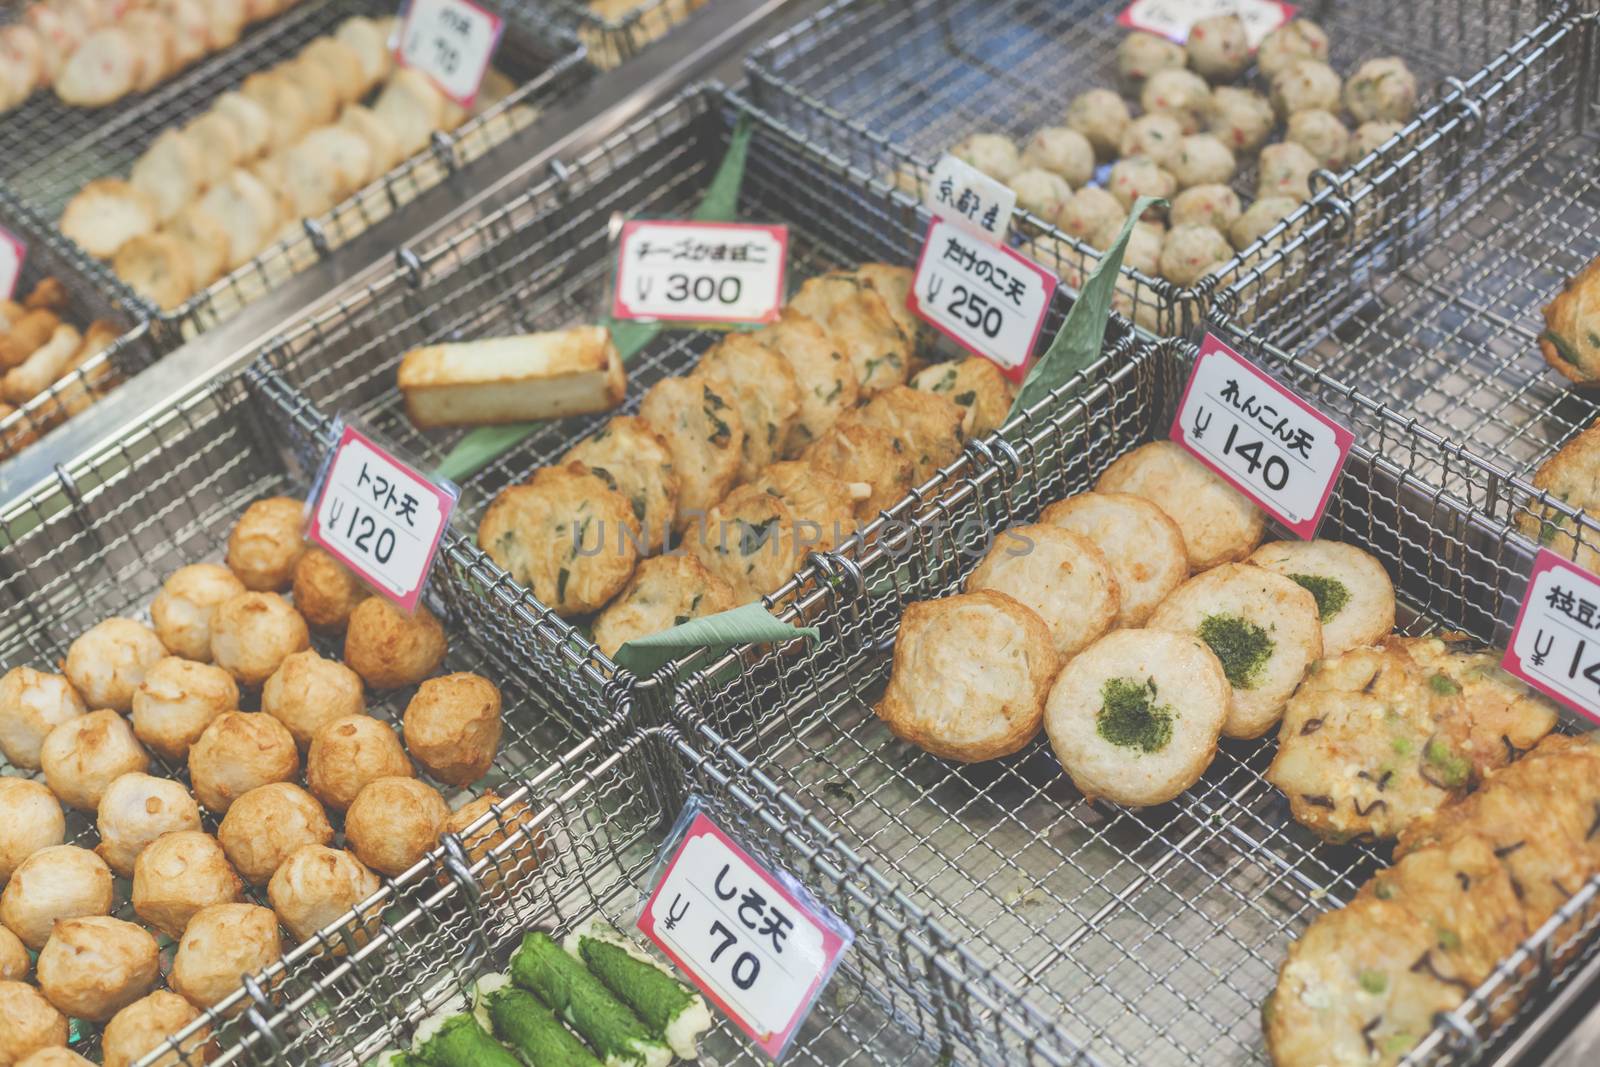 Traditional asian food market, Japan.

